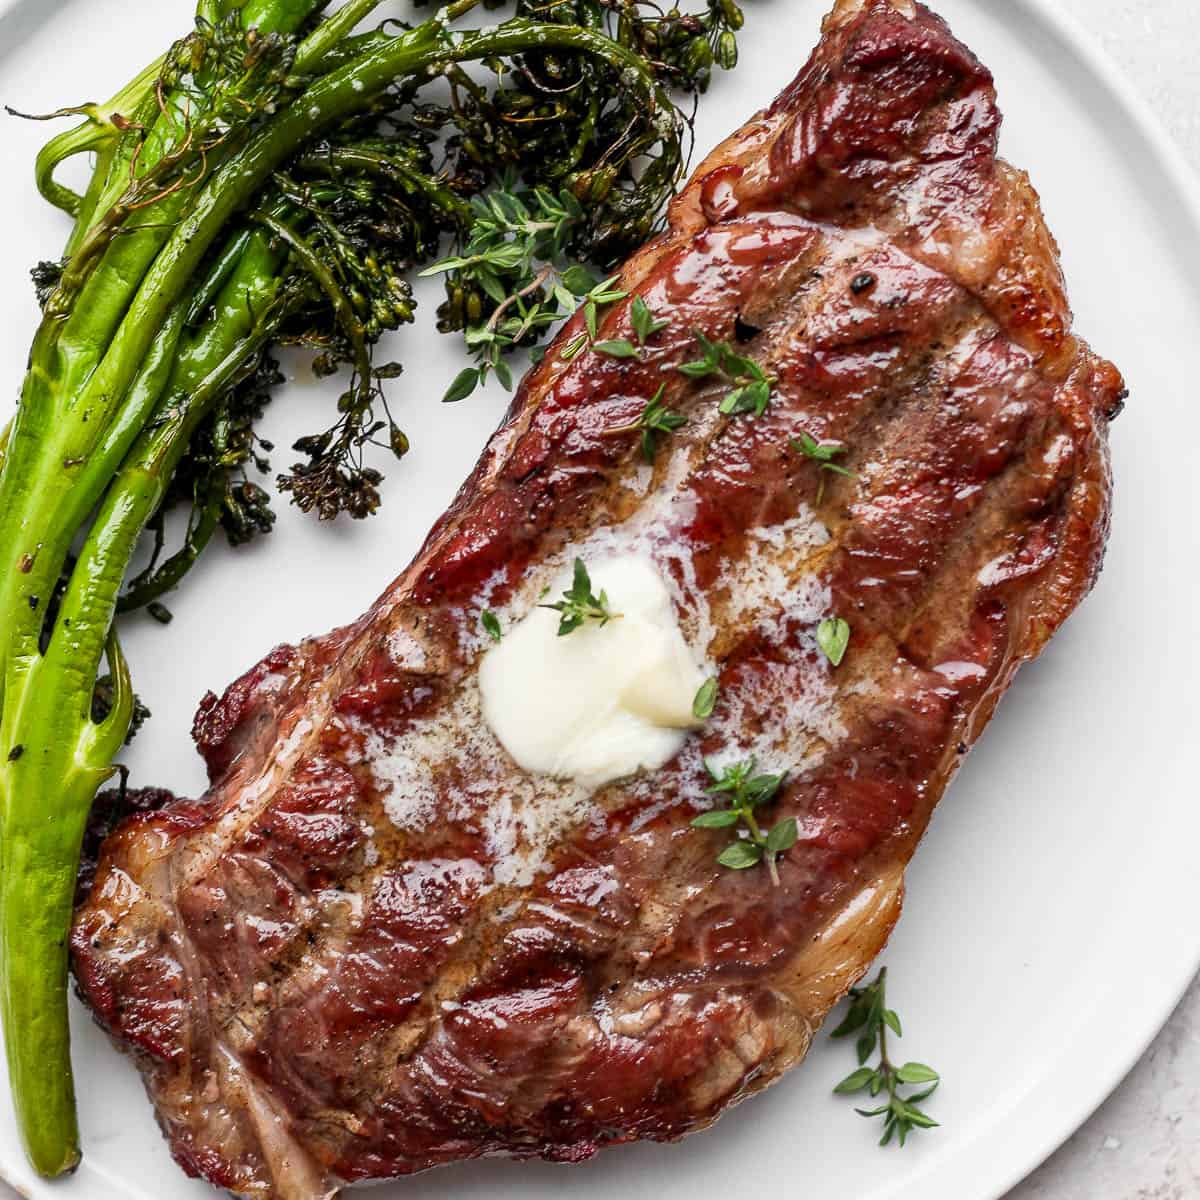 https://thewoodenskillet.com/wp-content/uploads/2021/05/reverse-seared-steak-recipe-31.jpg